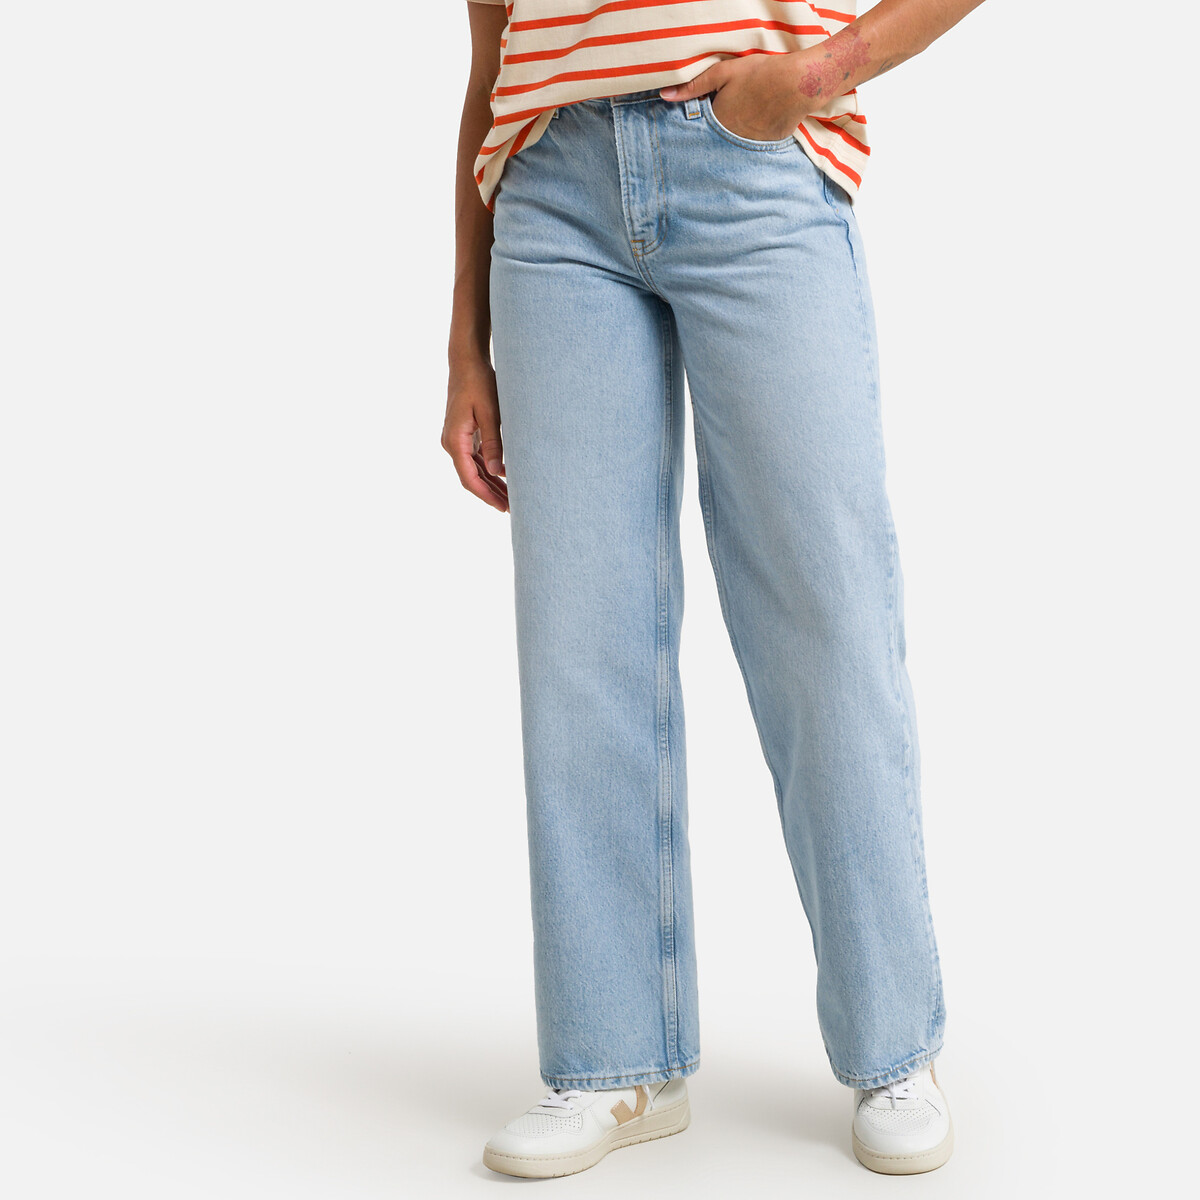 Denim wide leg jeans, mid rise length 30.5